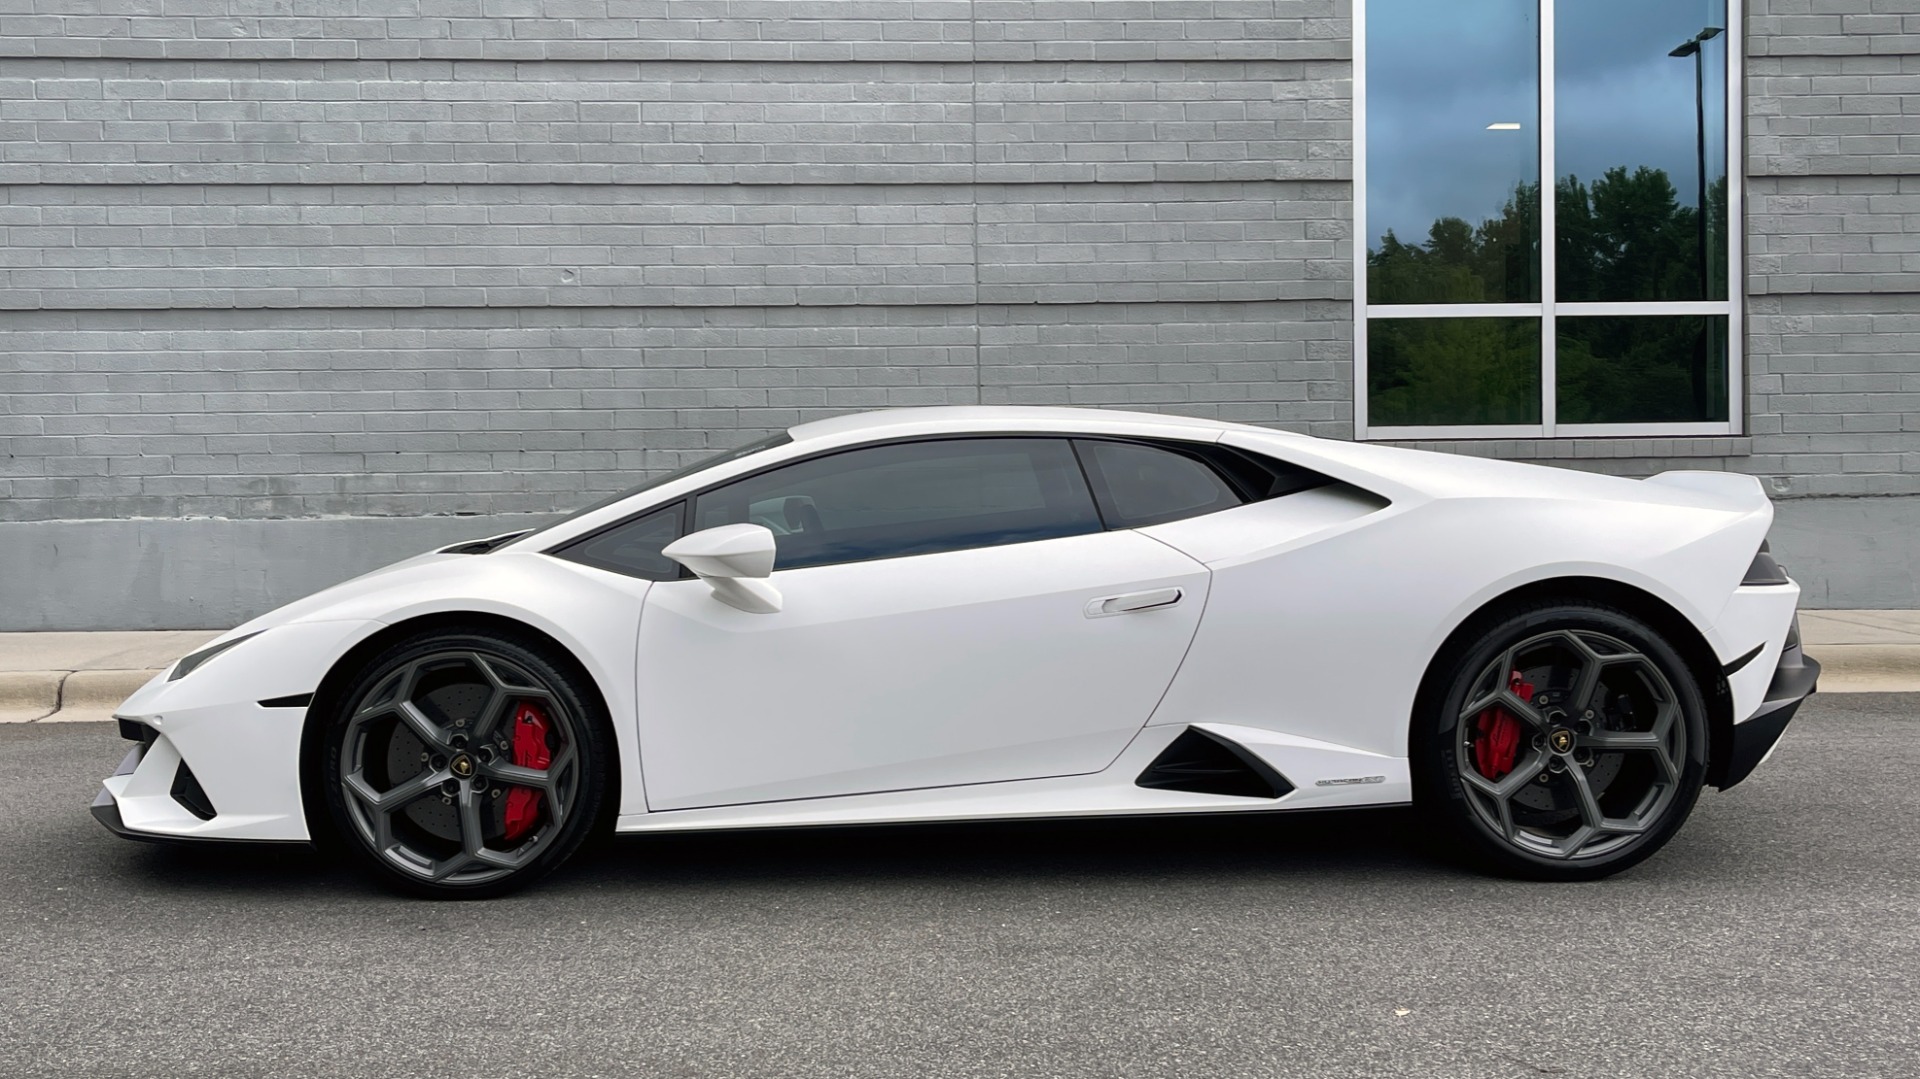 Used 2020 Lamborghini HURACAN EVO LP640-4 5.2L V10 630HP / 7-SPD AUTO / AWD / NAVIGATION / CAMERA for sale $325,000 at Formula Imports in Charlotte NC 28227 4